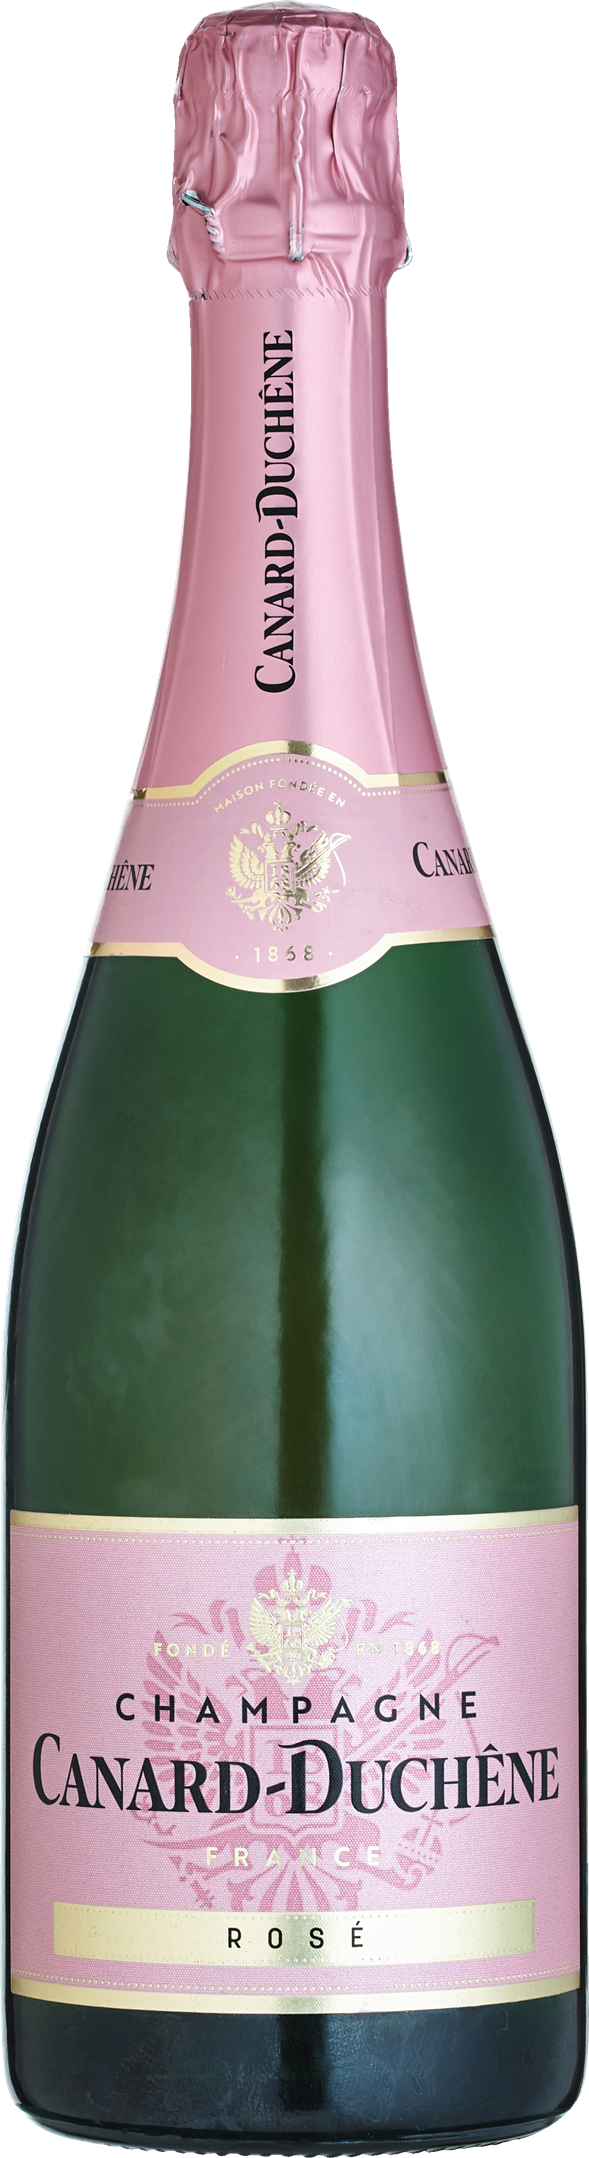 Canard-Duchene Champagne - Rosé